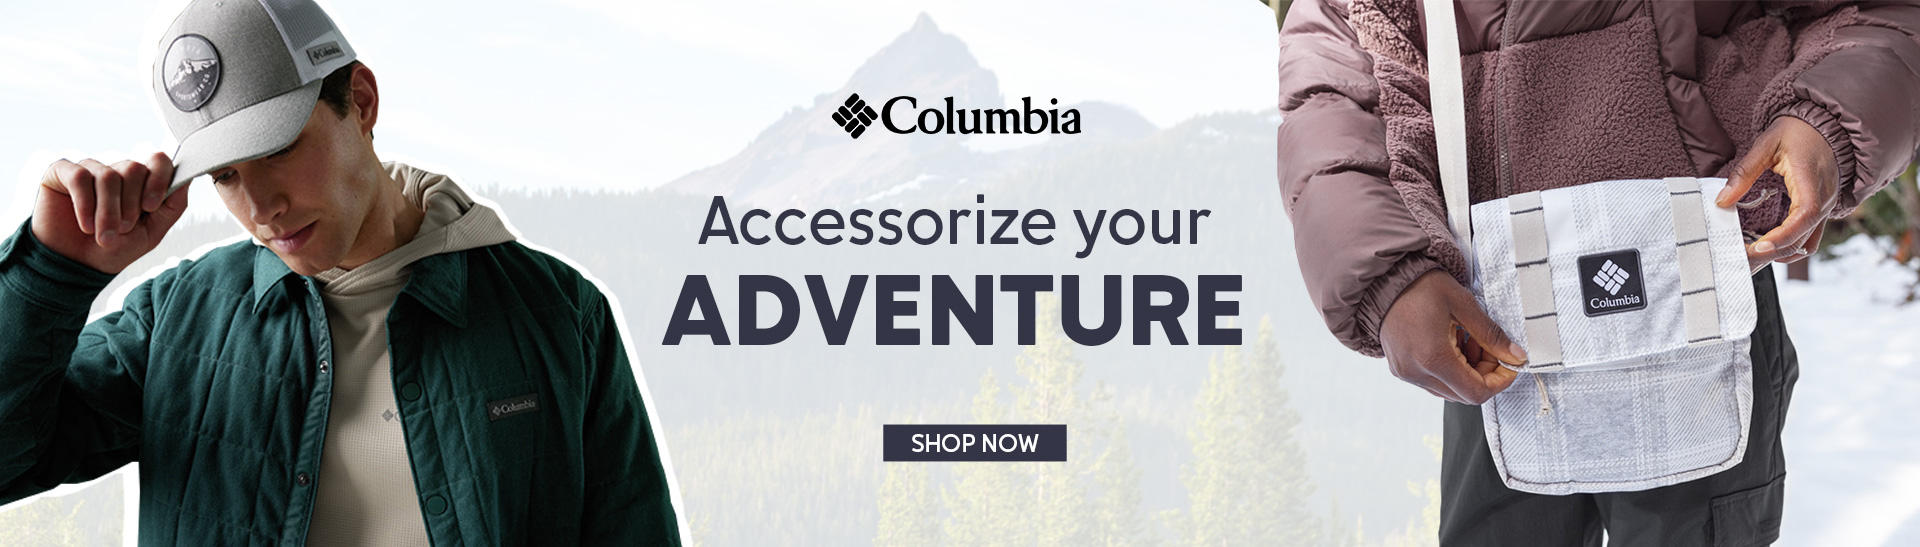 Accessorize your adventure